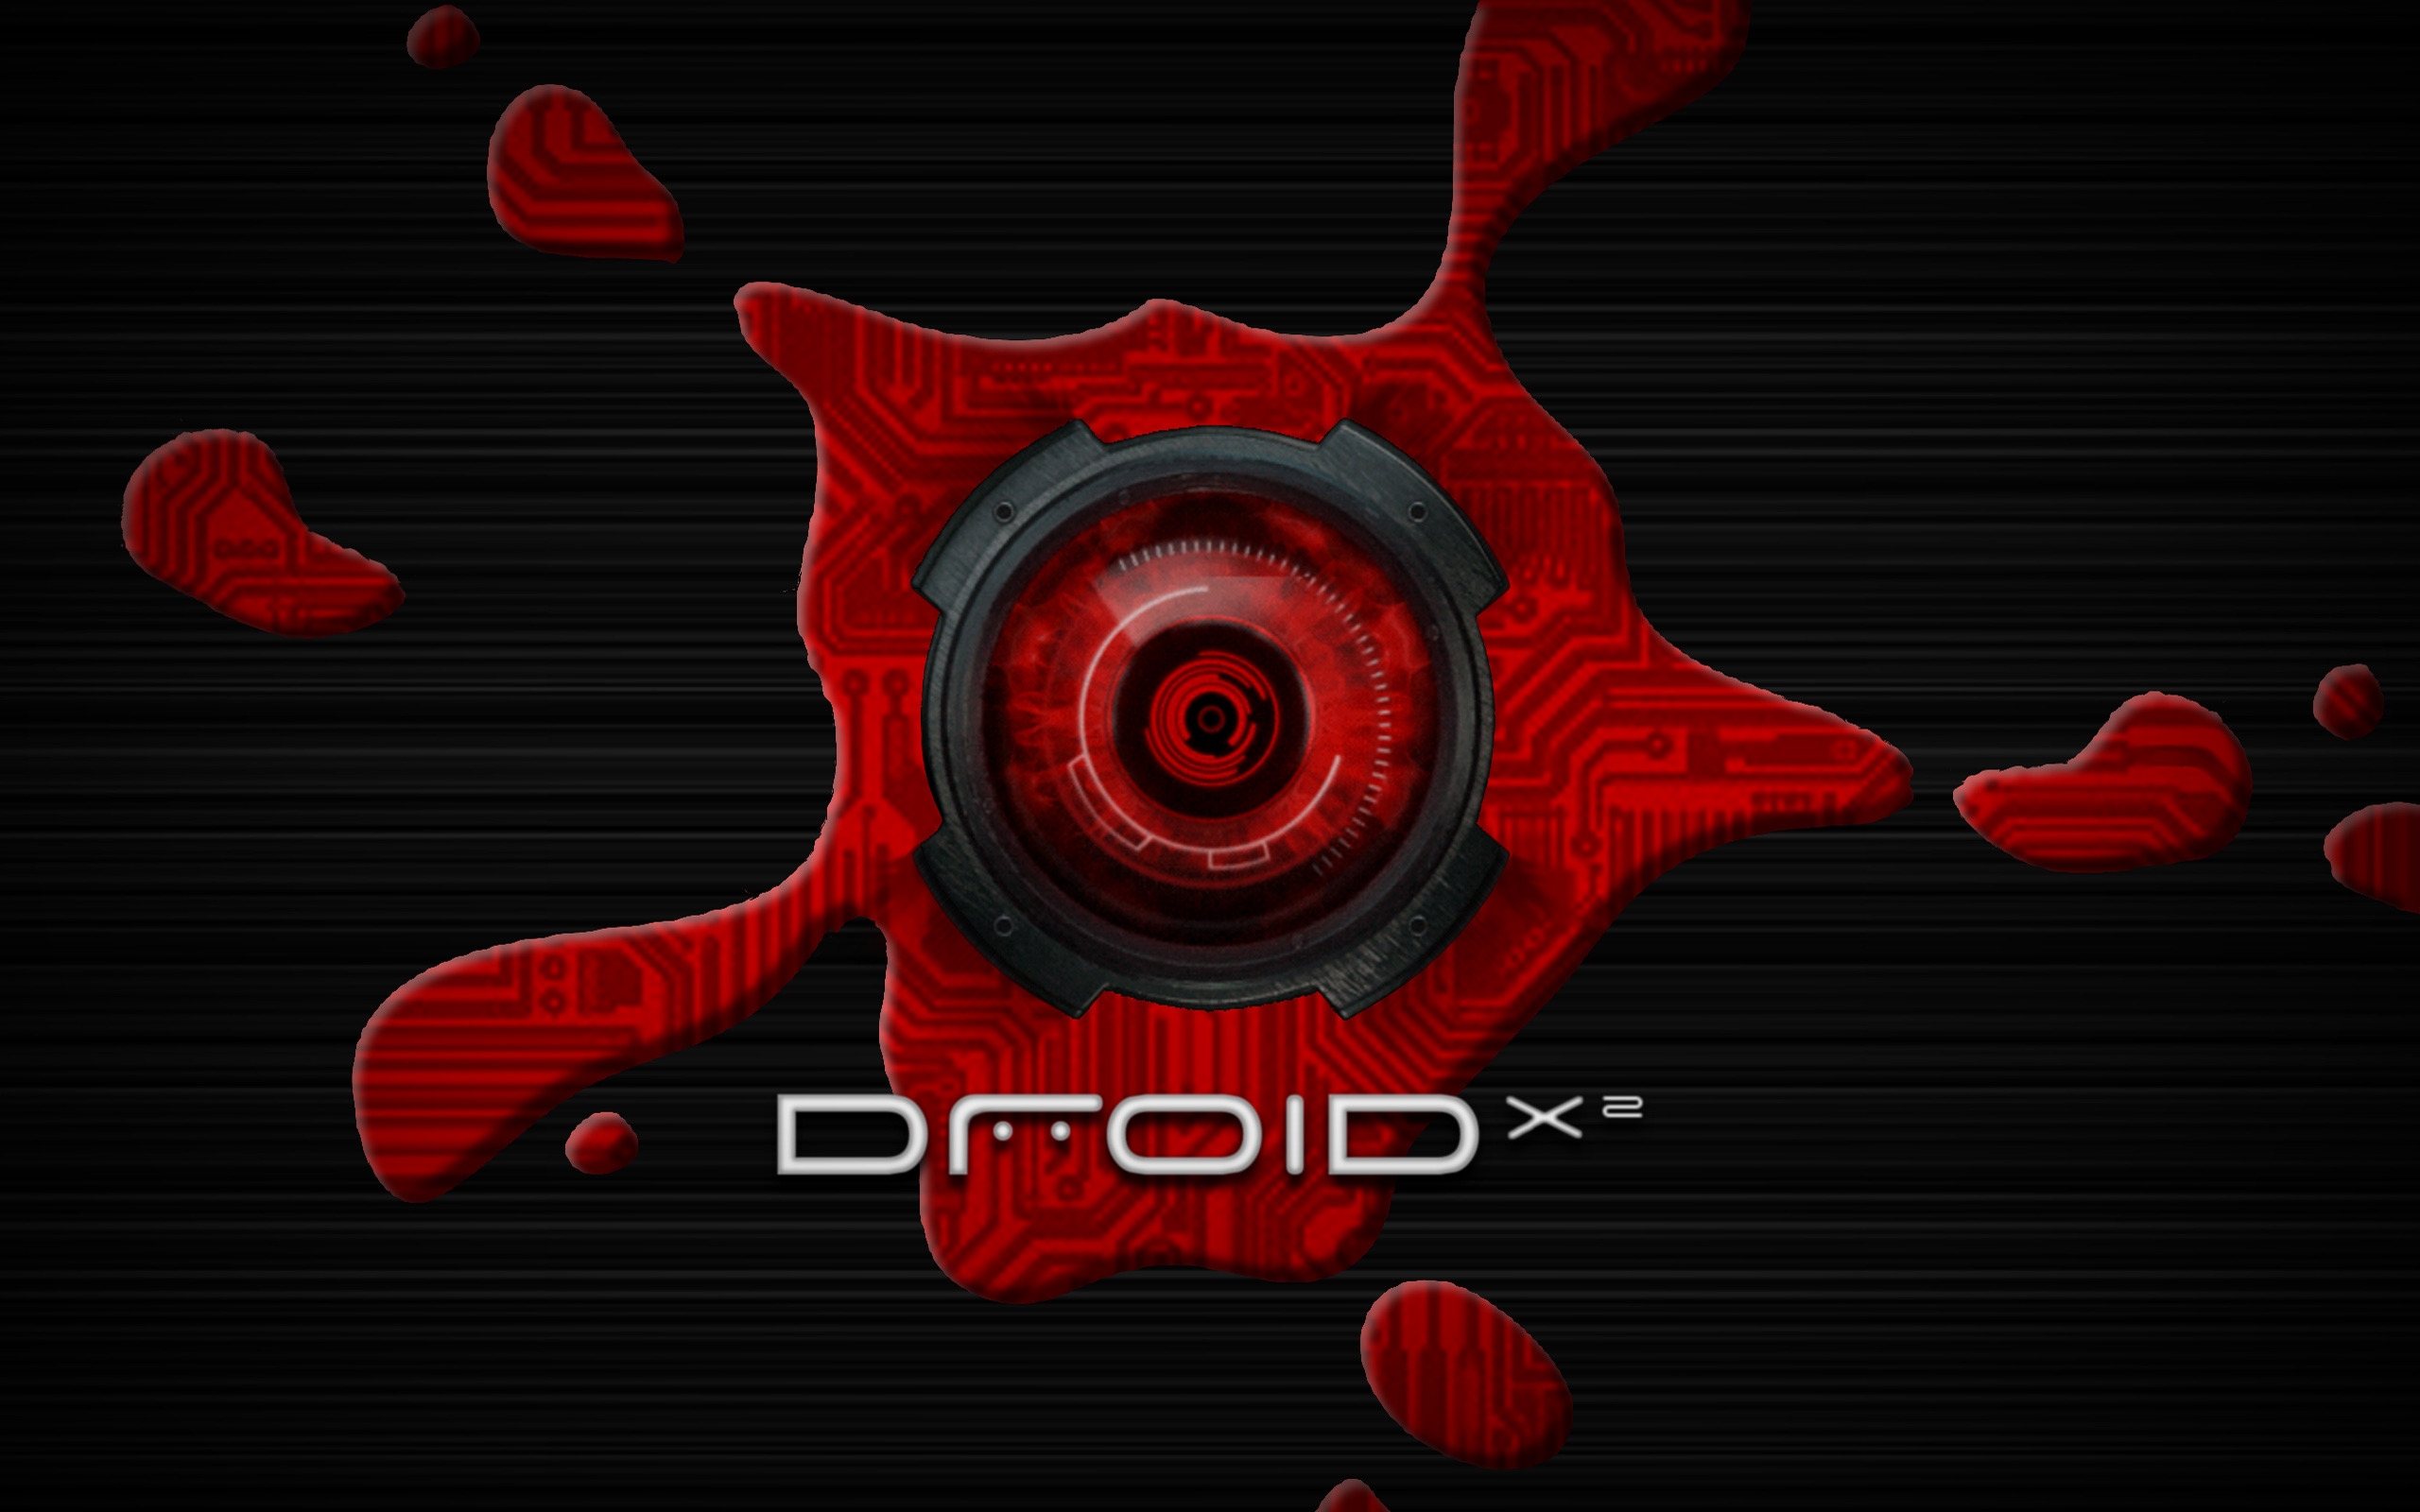 Droid X2 Splat for 2560 x 1600 widescreen resolution